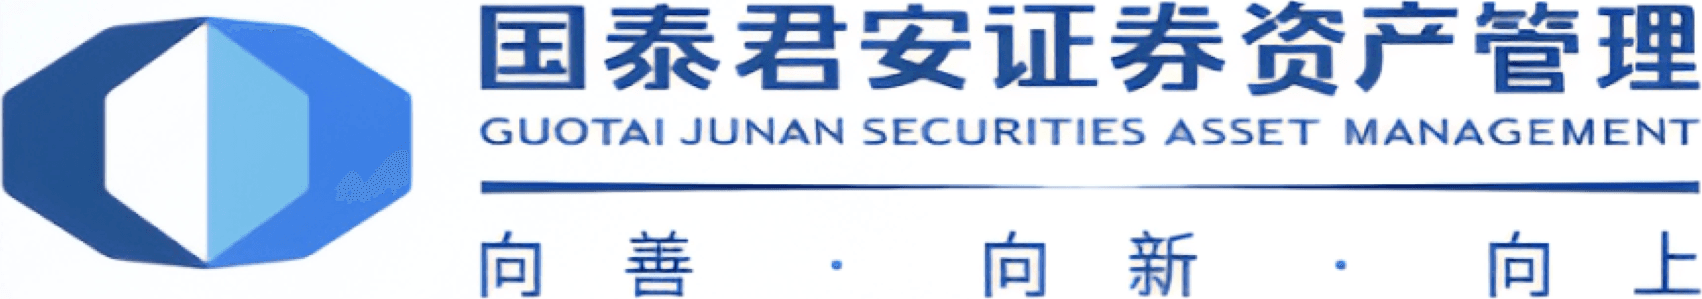 Guotai Junan Securities Asset Management